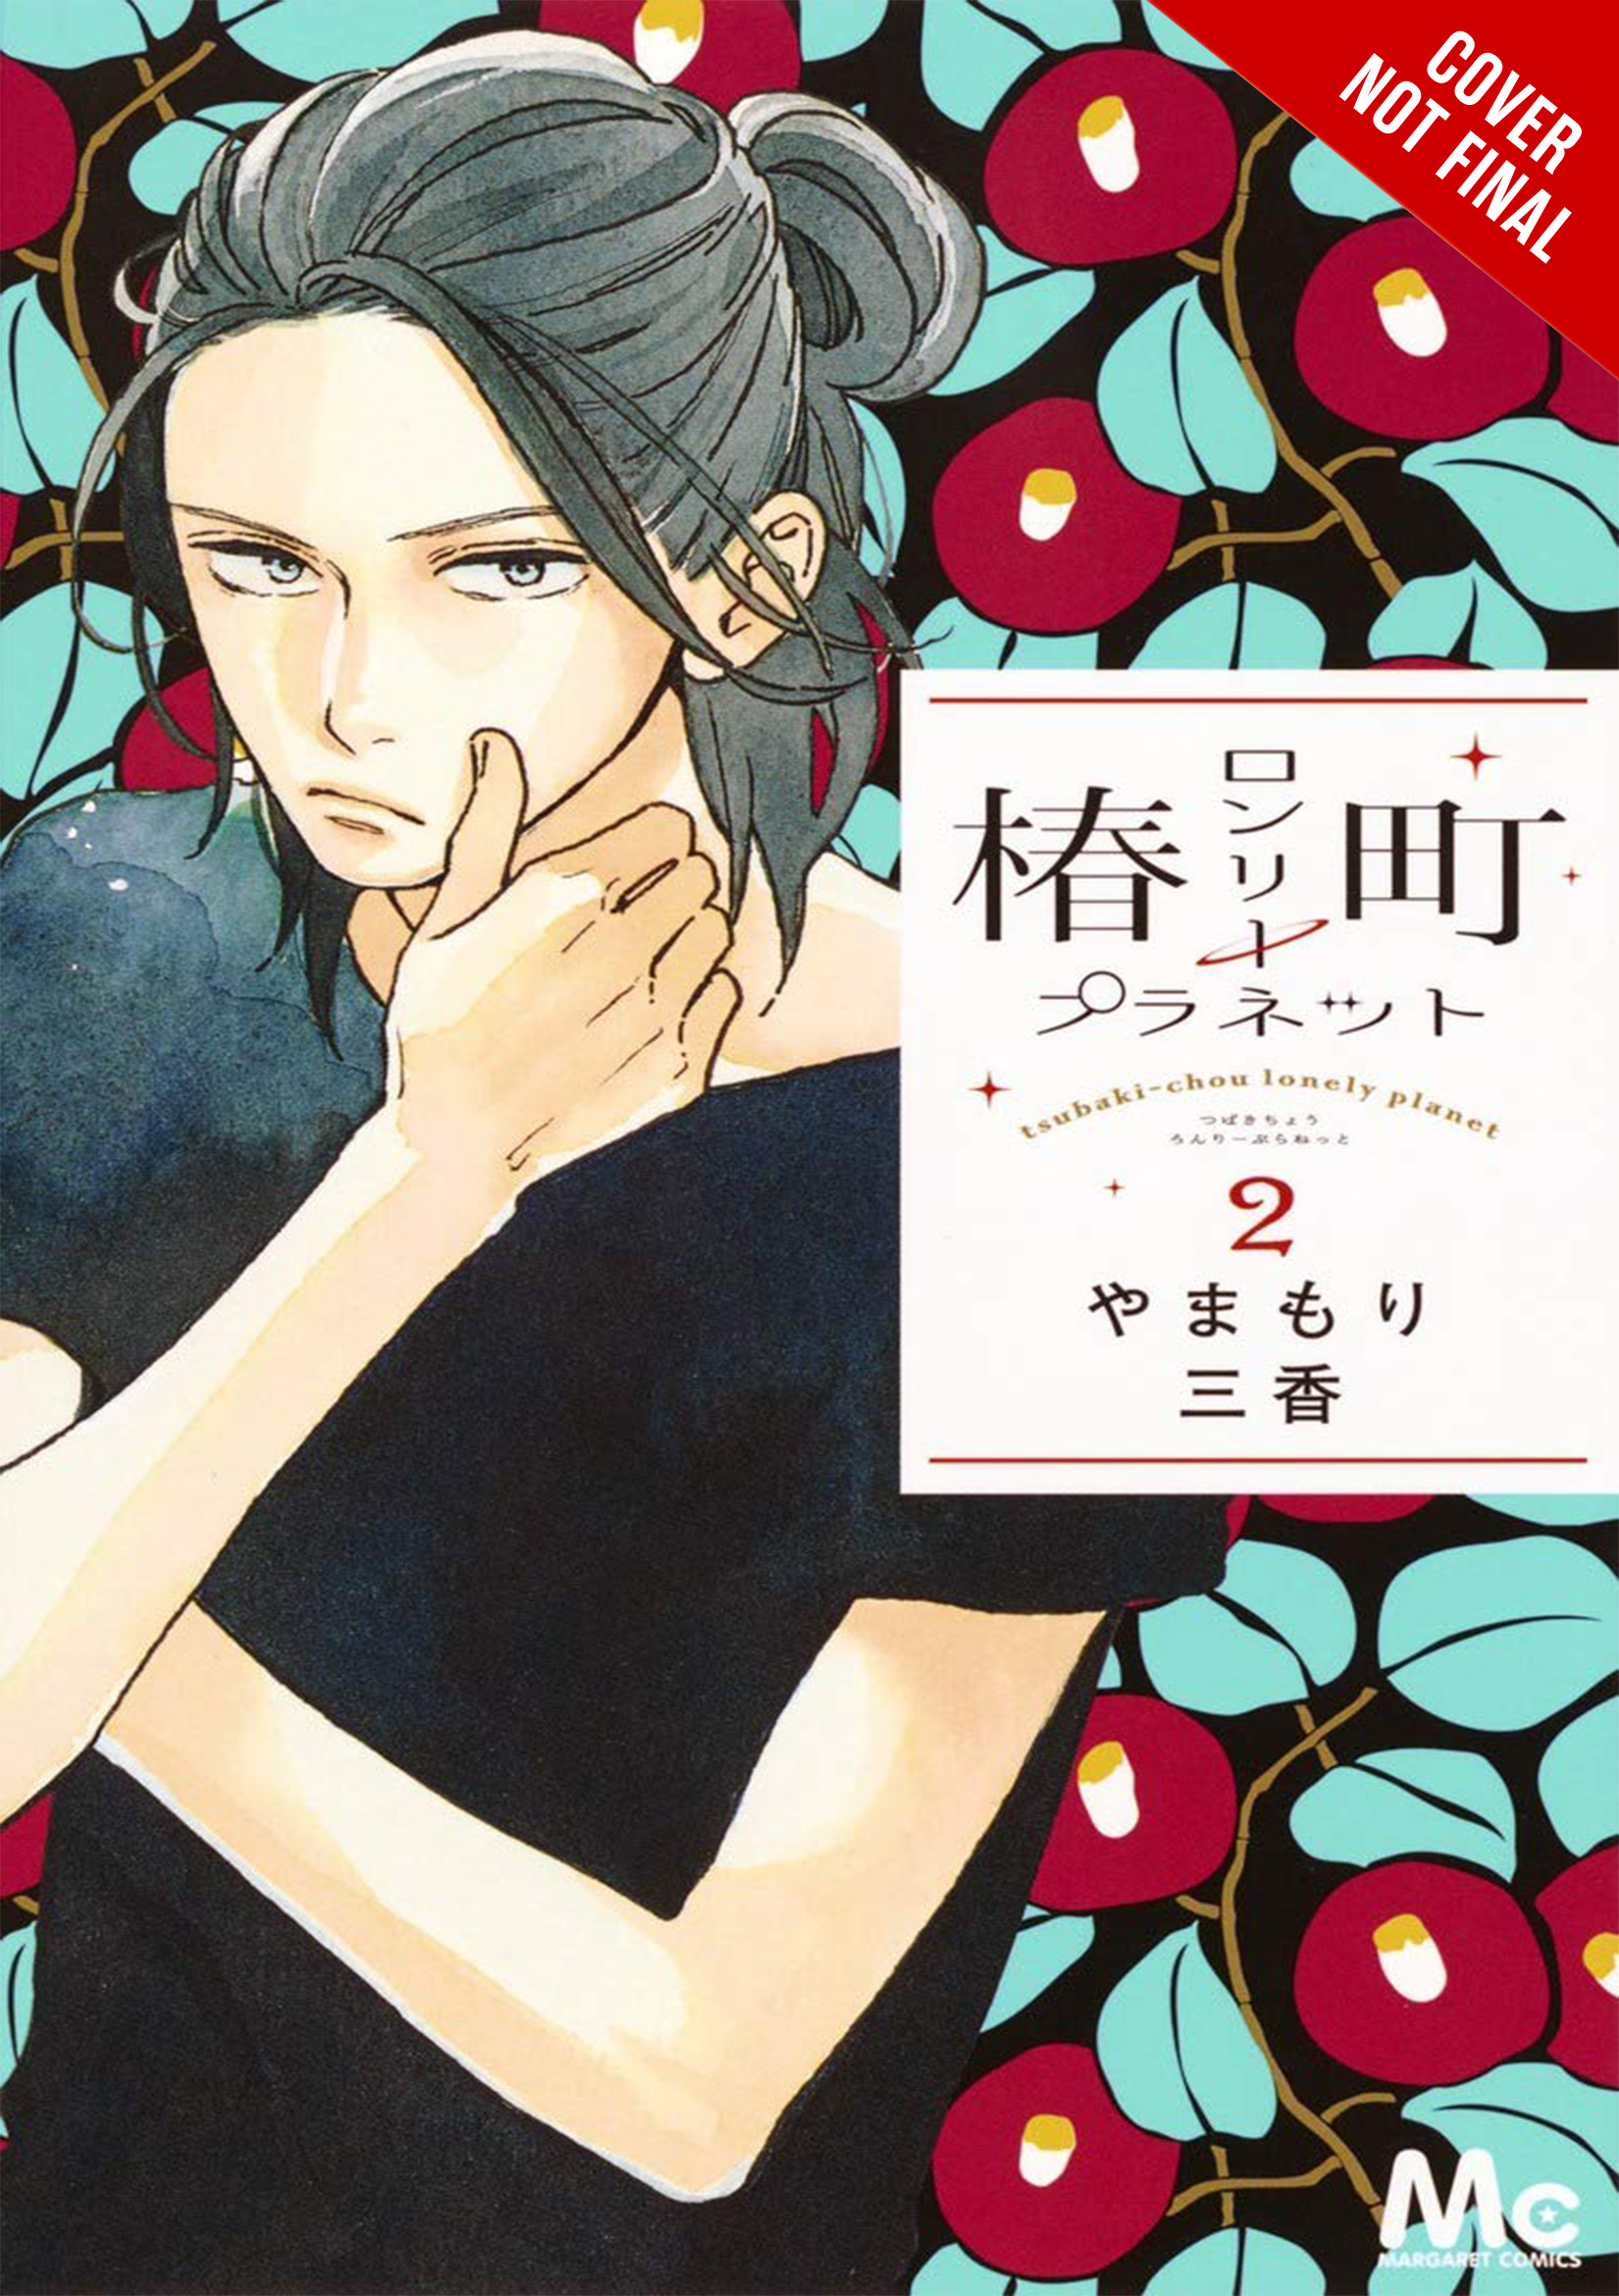 Tsubaki-Chou Lonely Planet Manga Volume 2